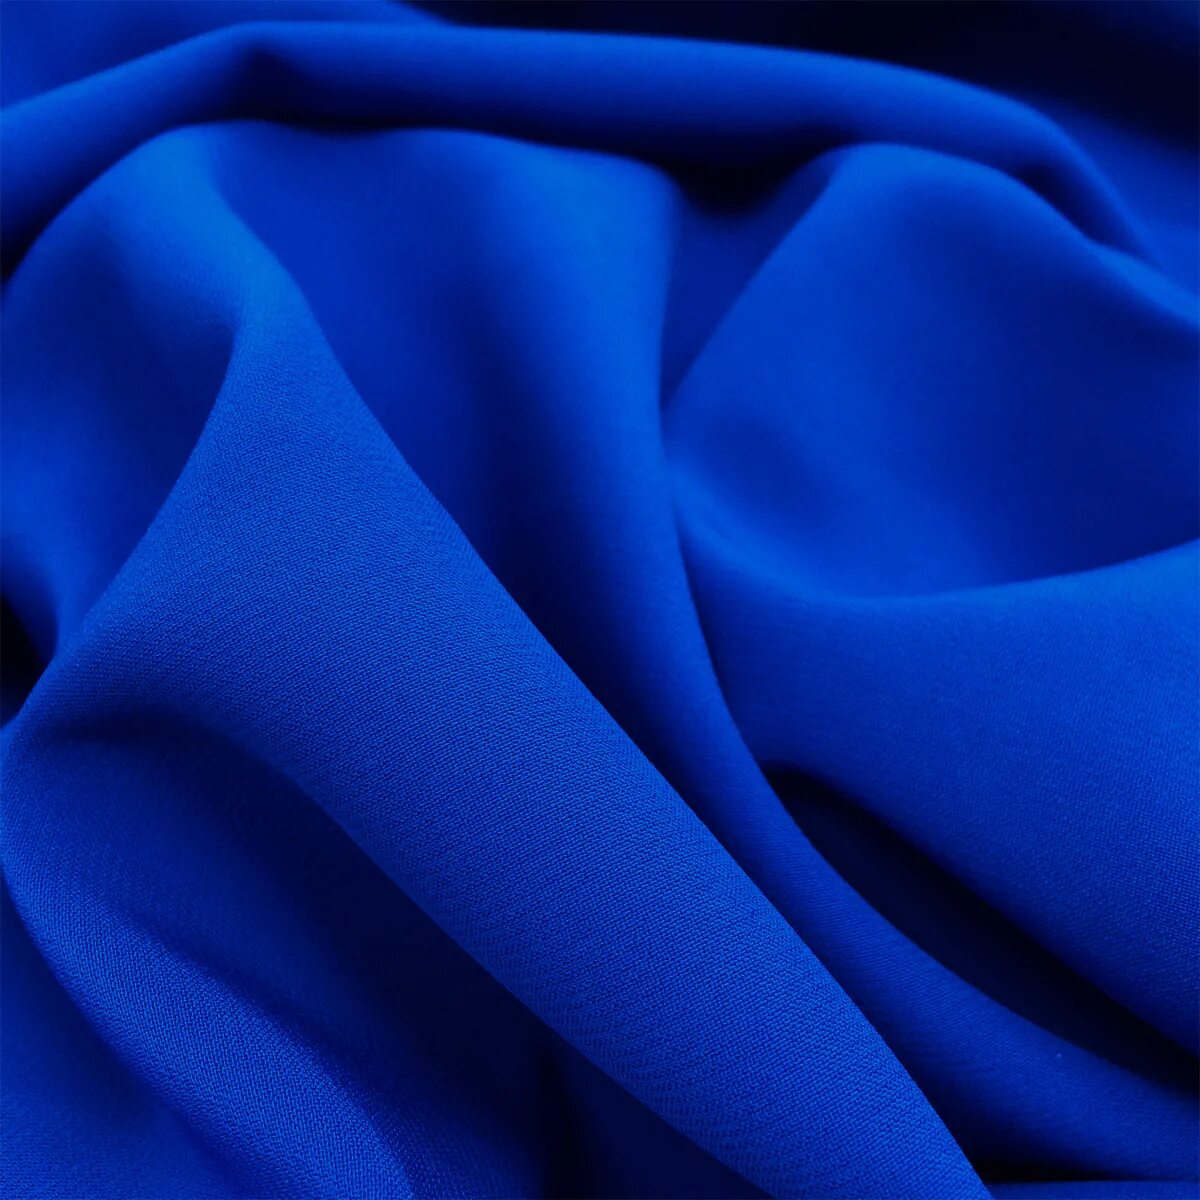 Цвет электро. Ткань бифлекс ультрамарин. Вискоза стрейч. Синий цвет. Синий электрик цвет.